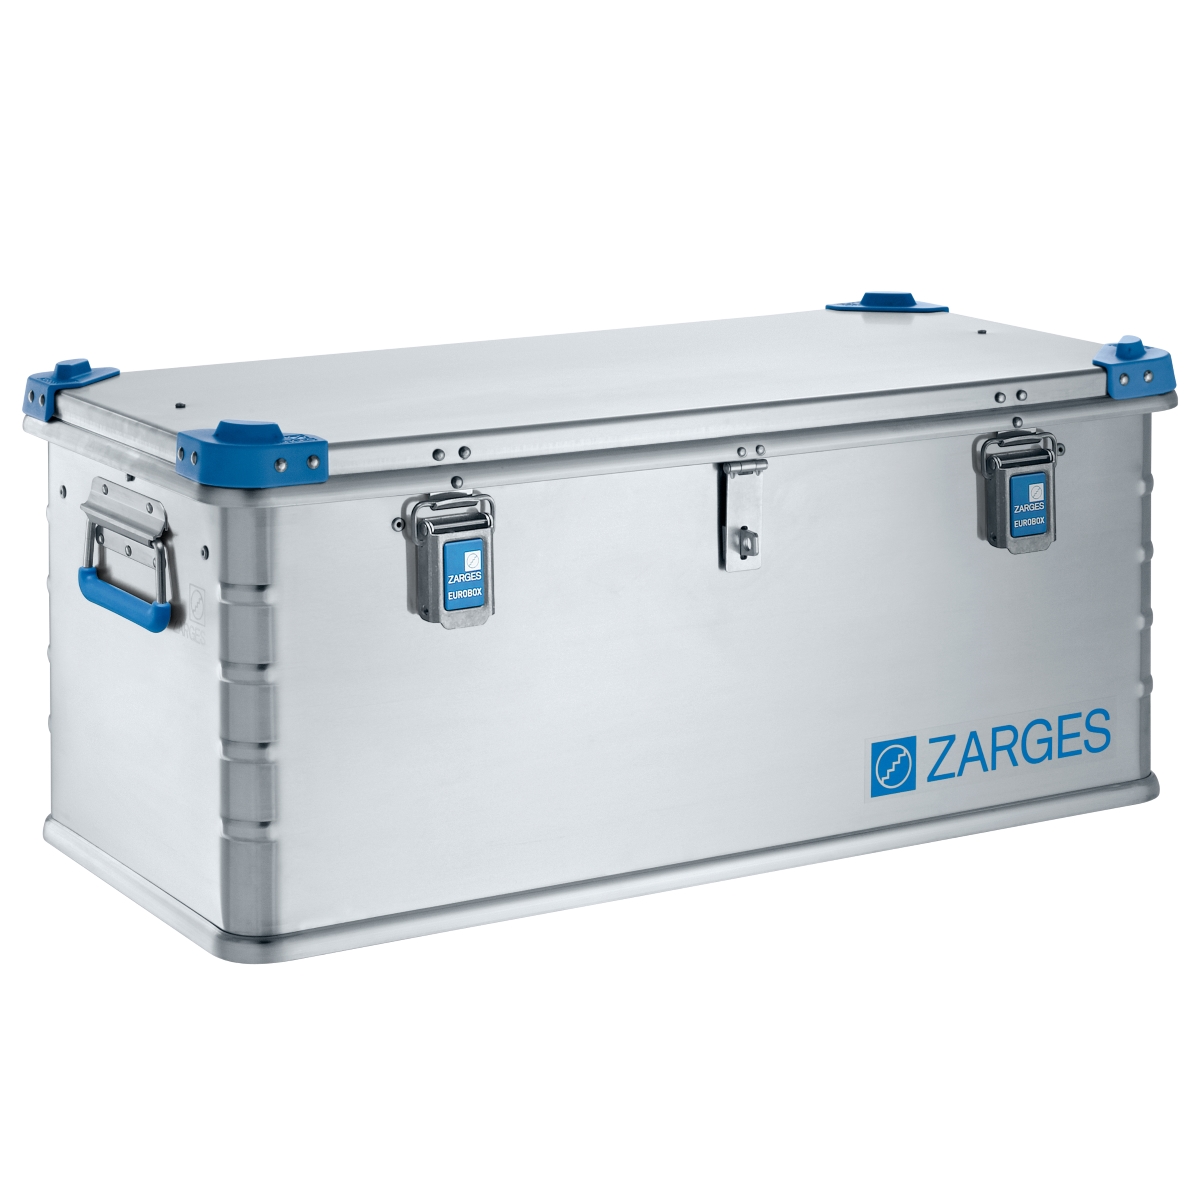 Zarges Transportkiste Eurobox 40701 (550 x 350 x 220 mm)